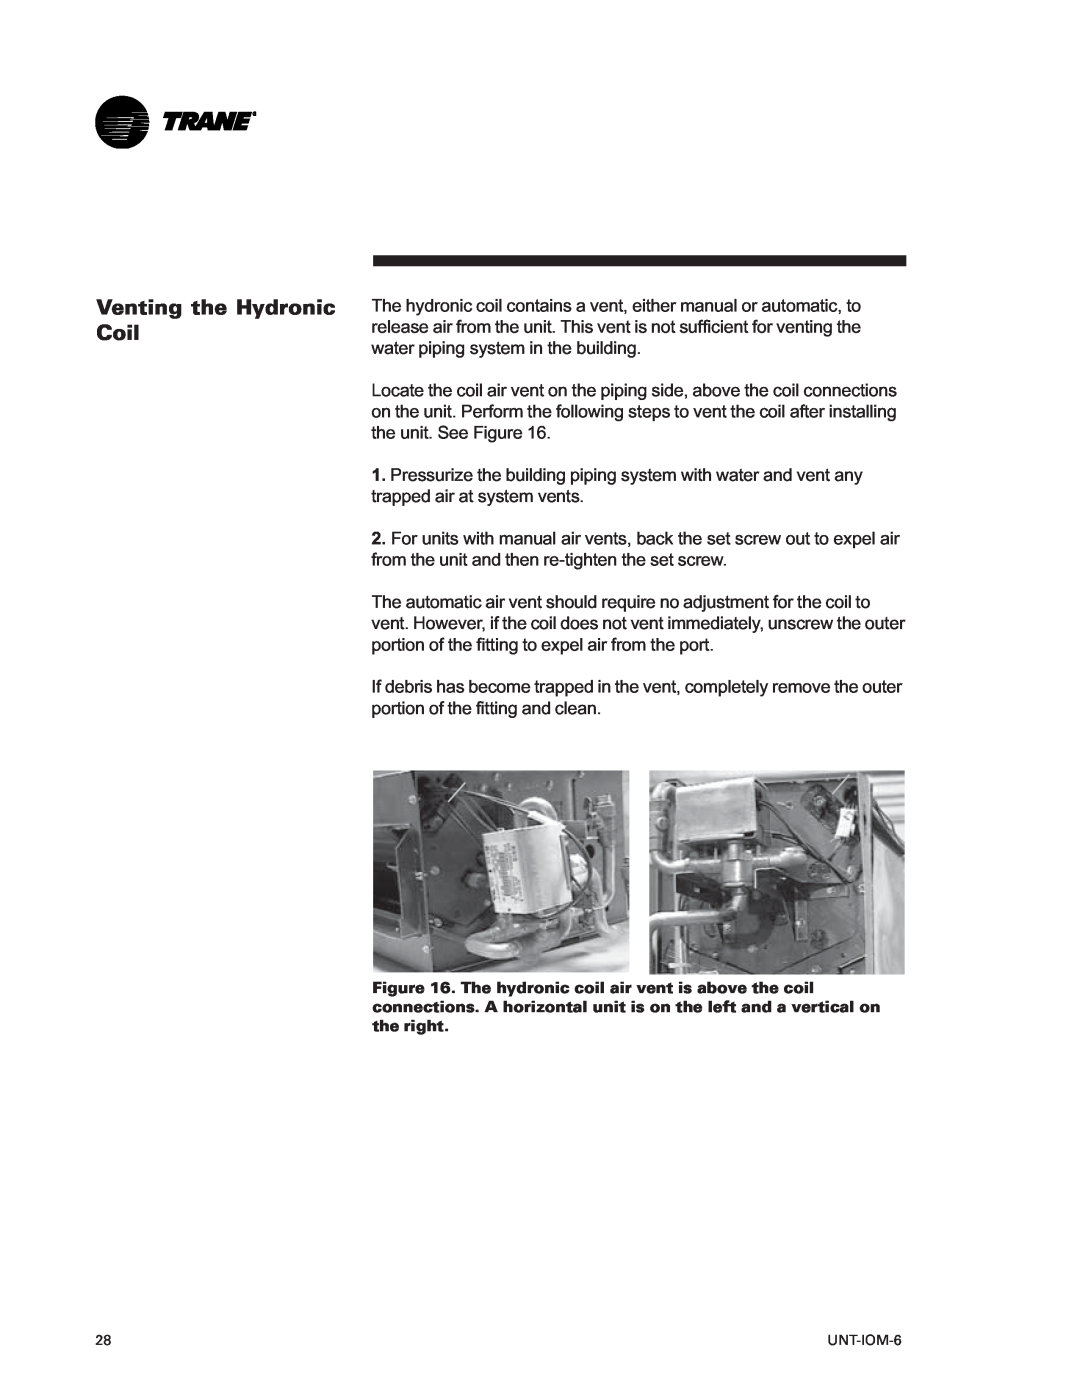 Trane LO manual Venting the Hydronic Coil, UNT-IOM-6 